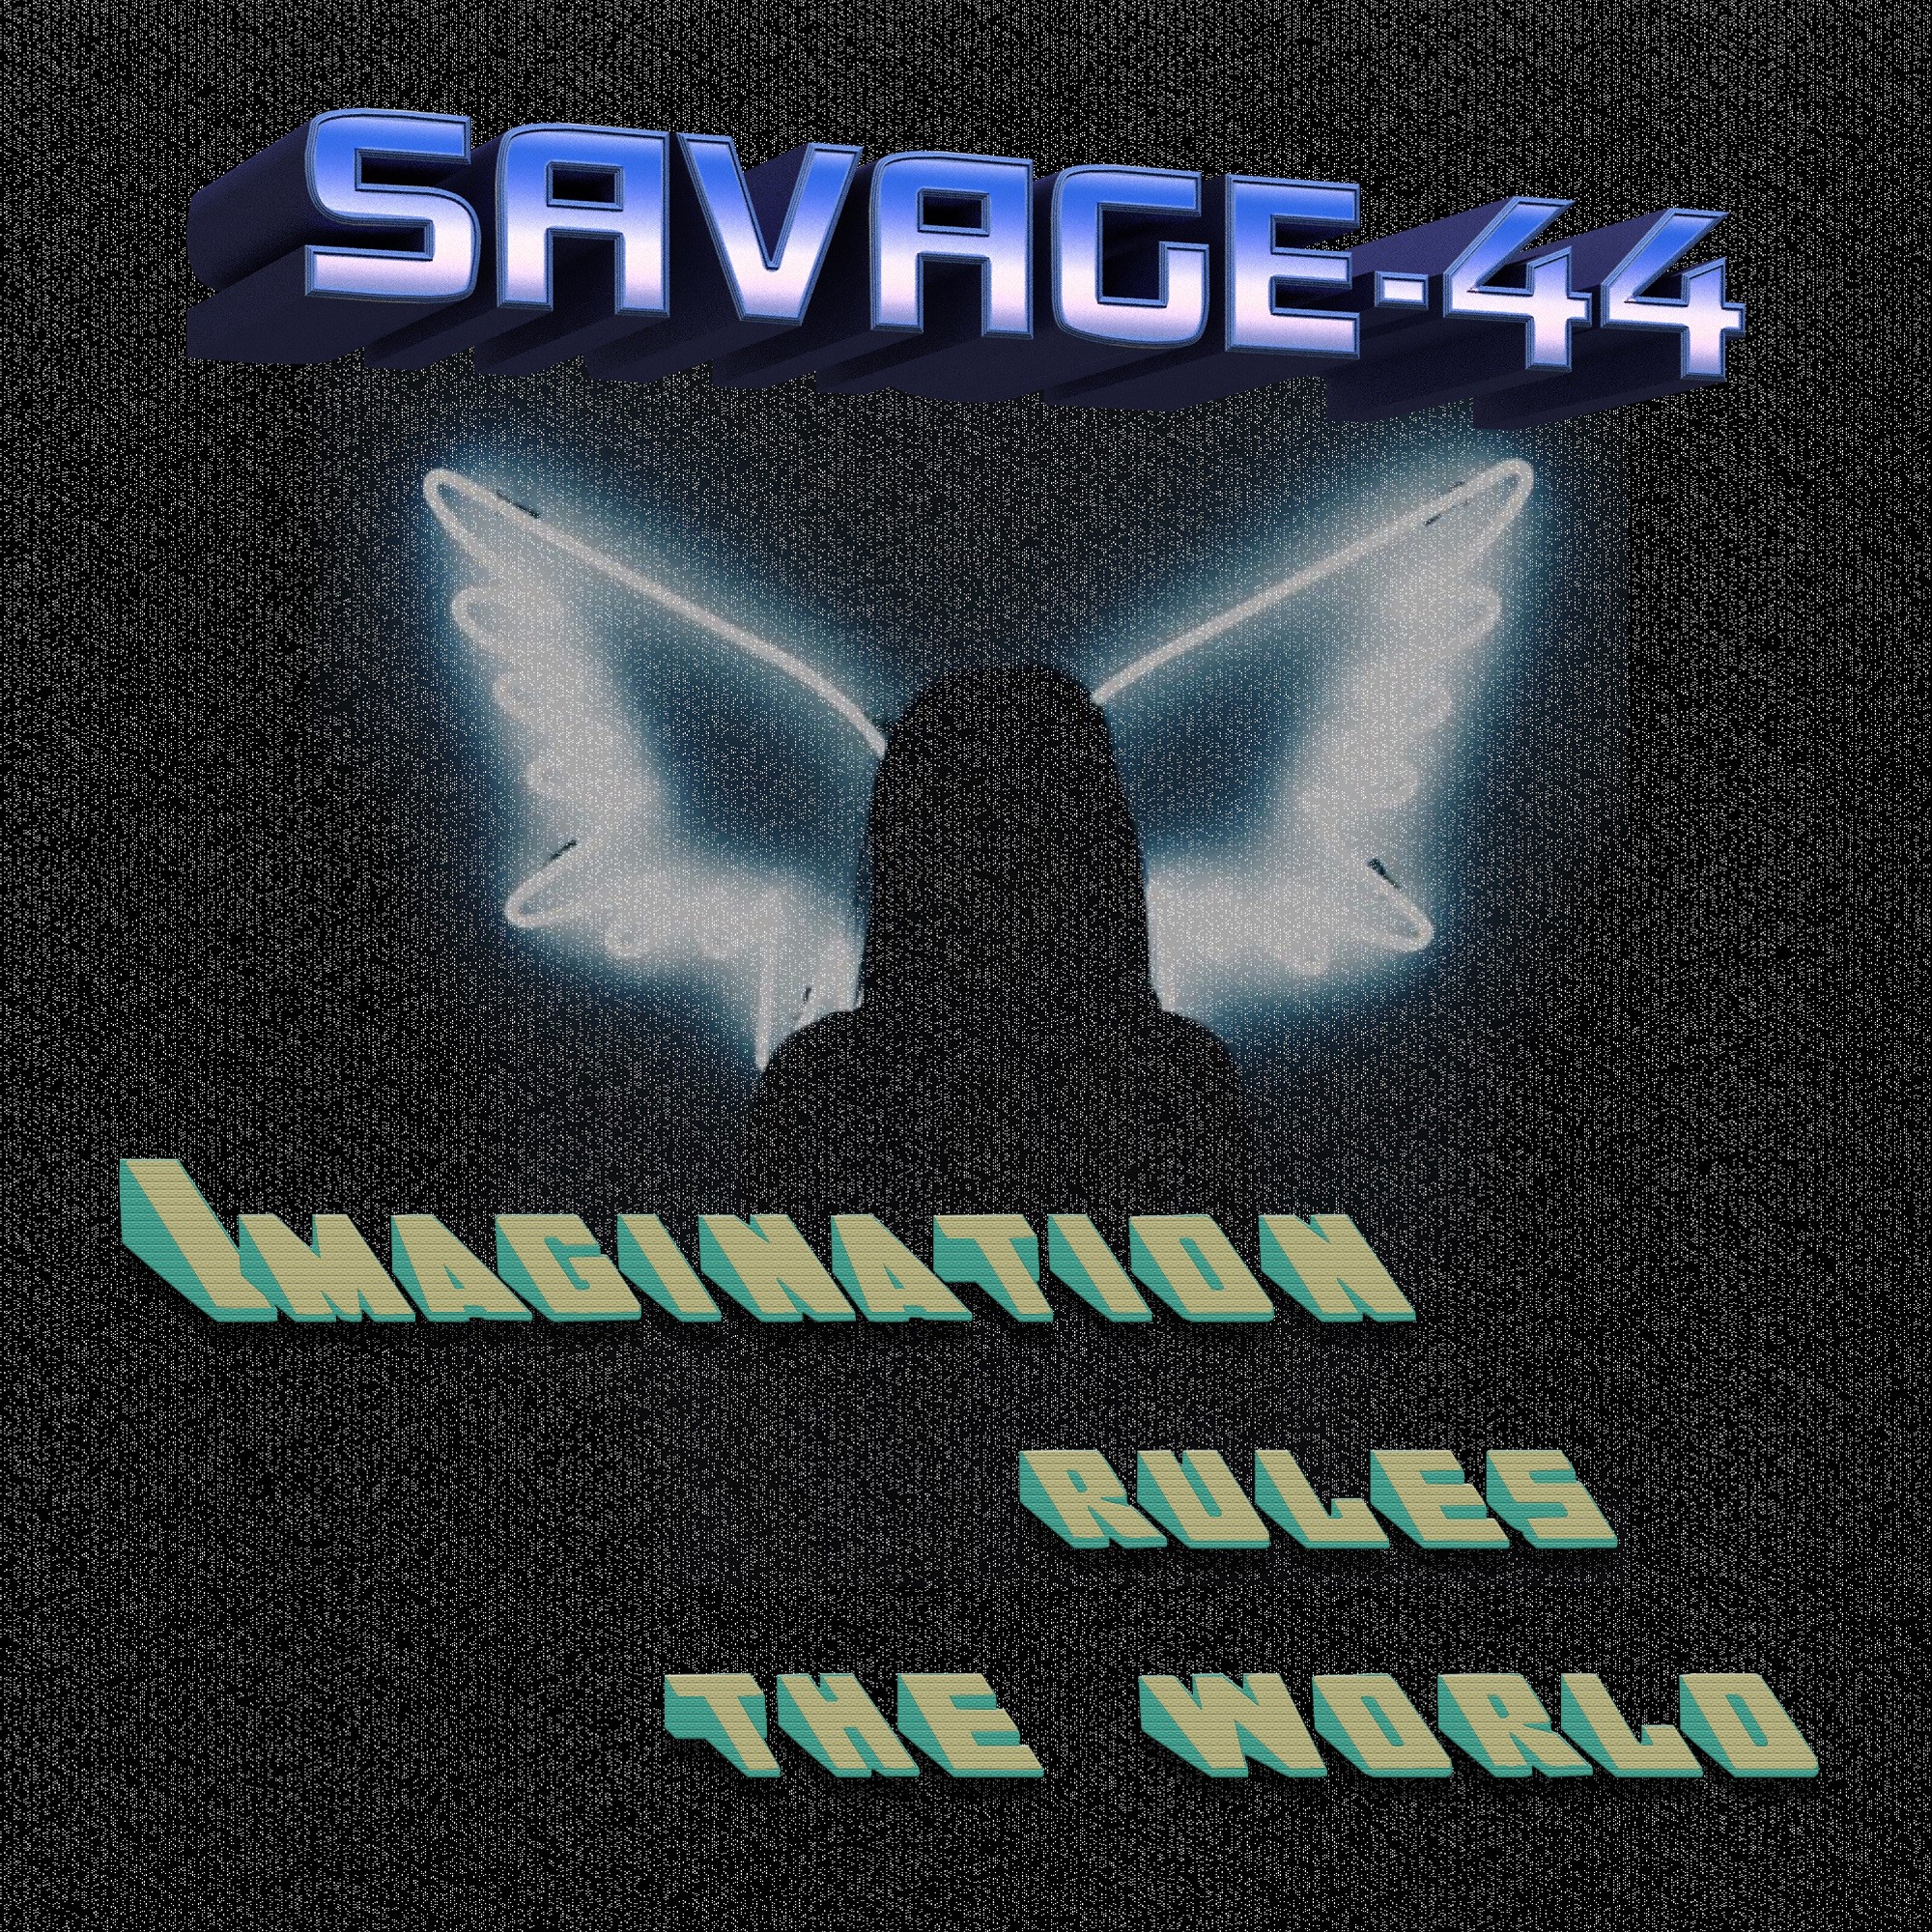 Savage 44 the music ring